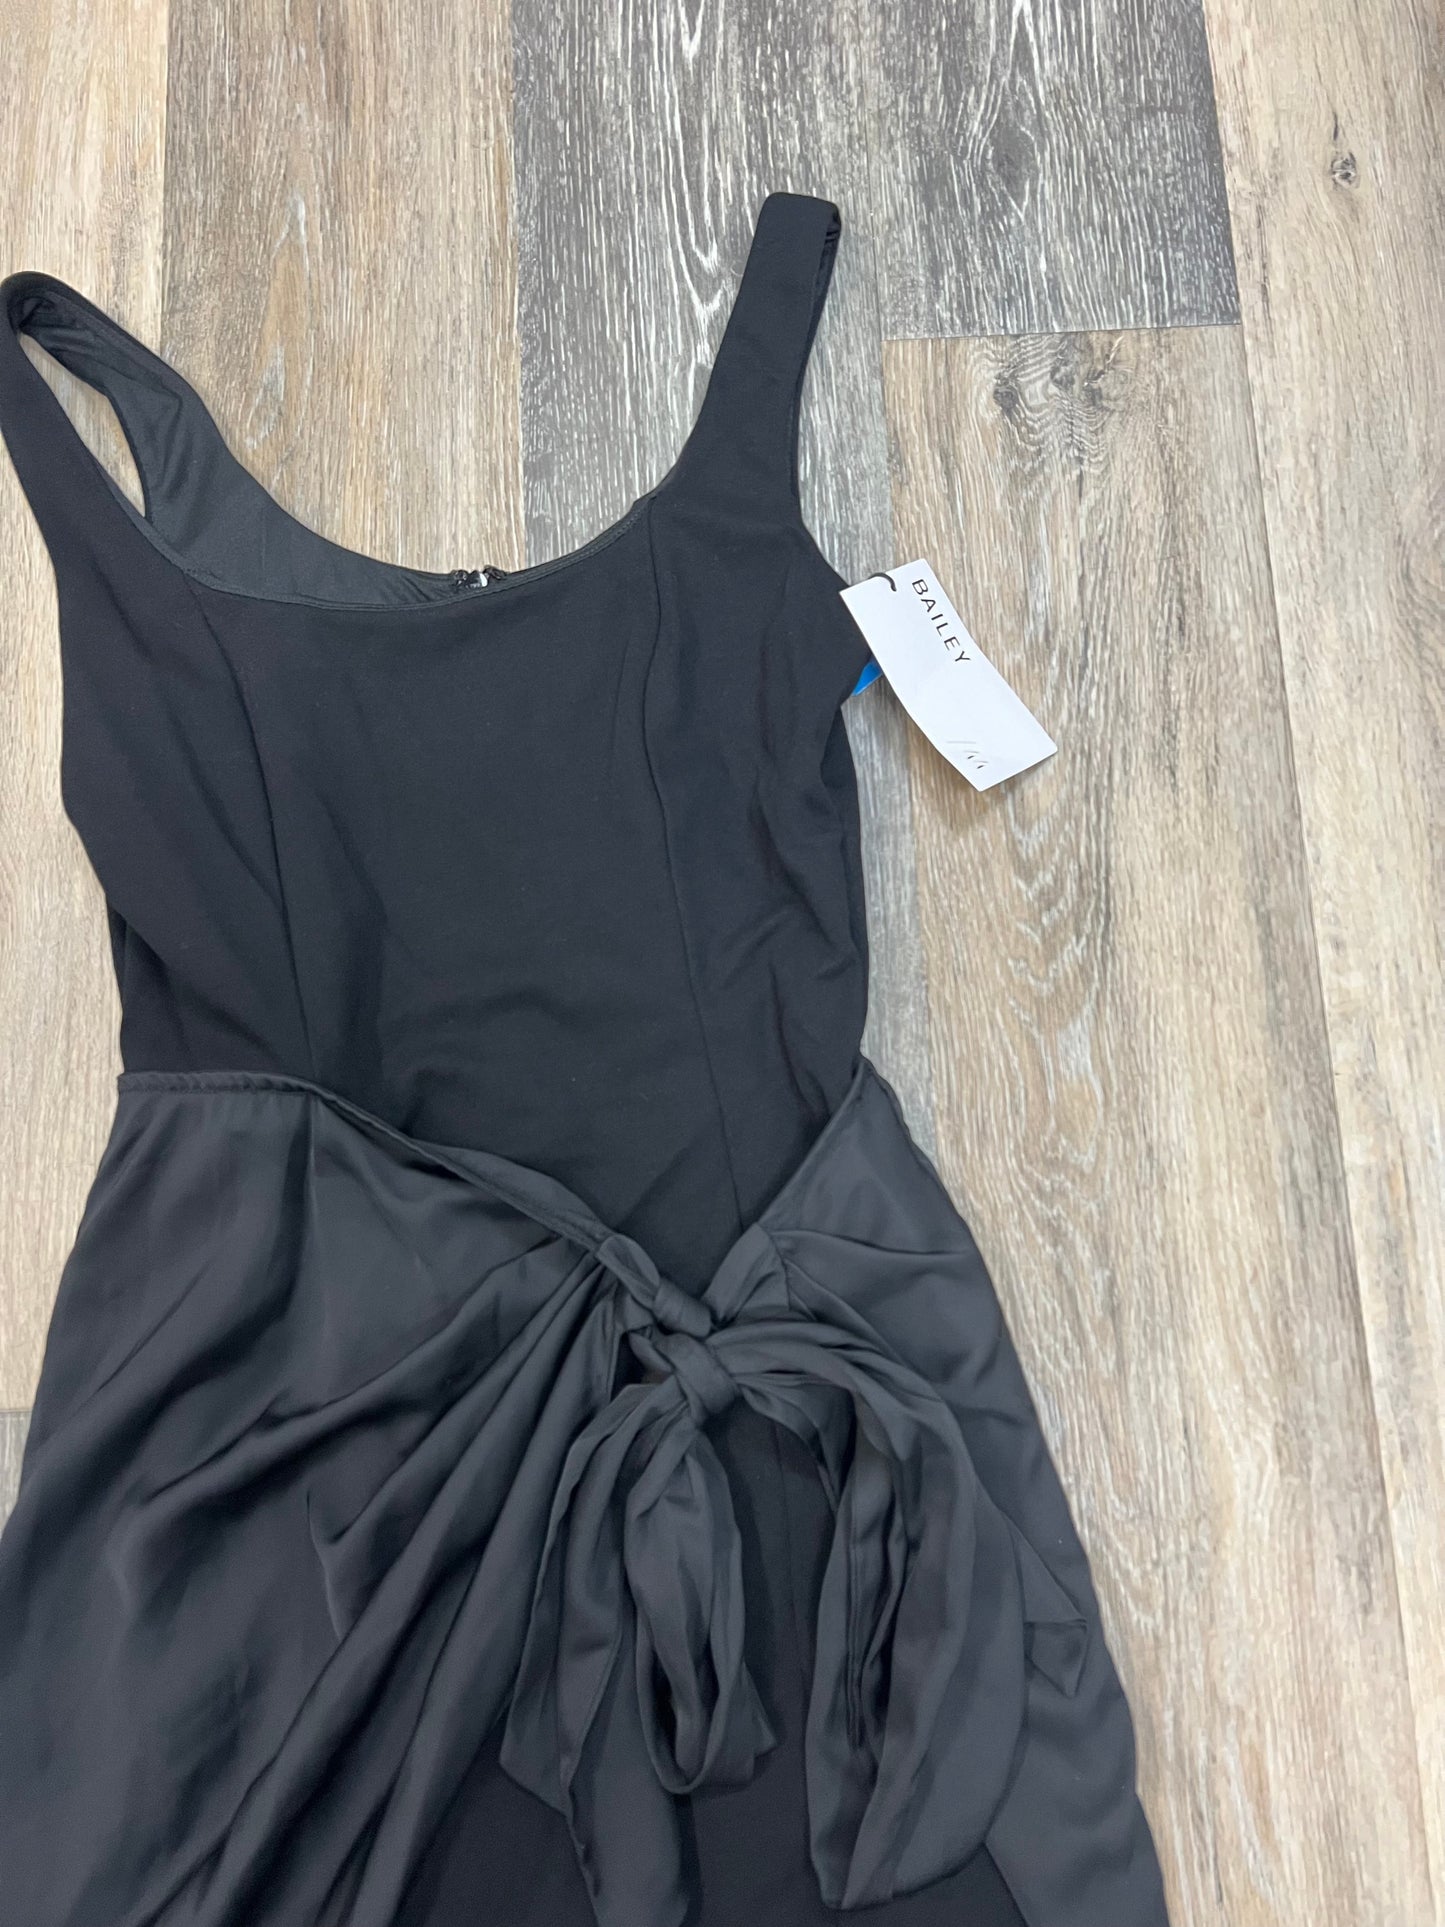 Black Dress Casual Short Bailey 44, Size Xs